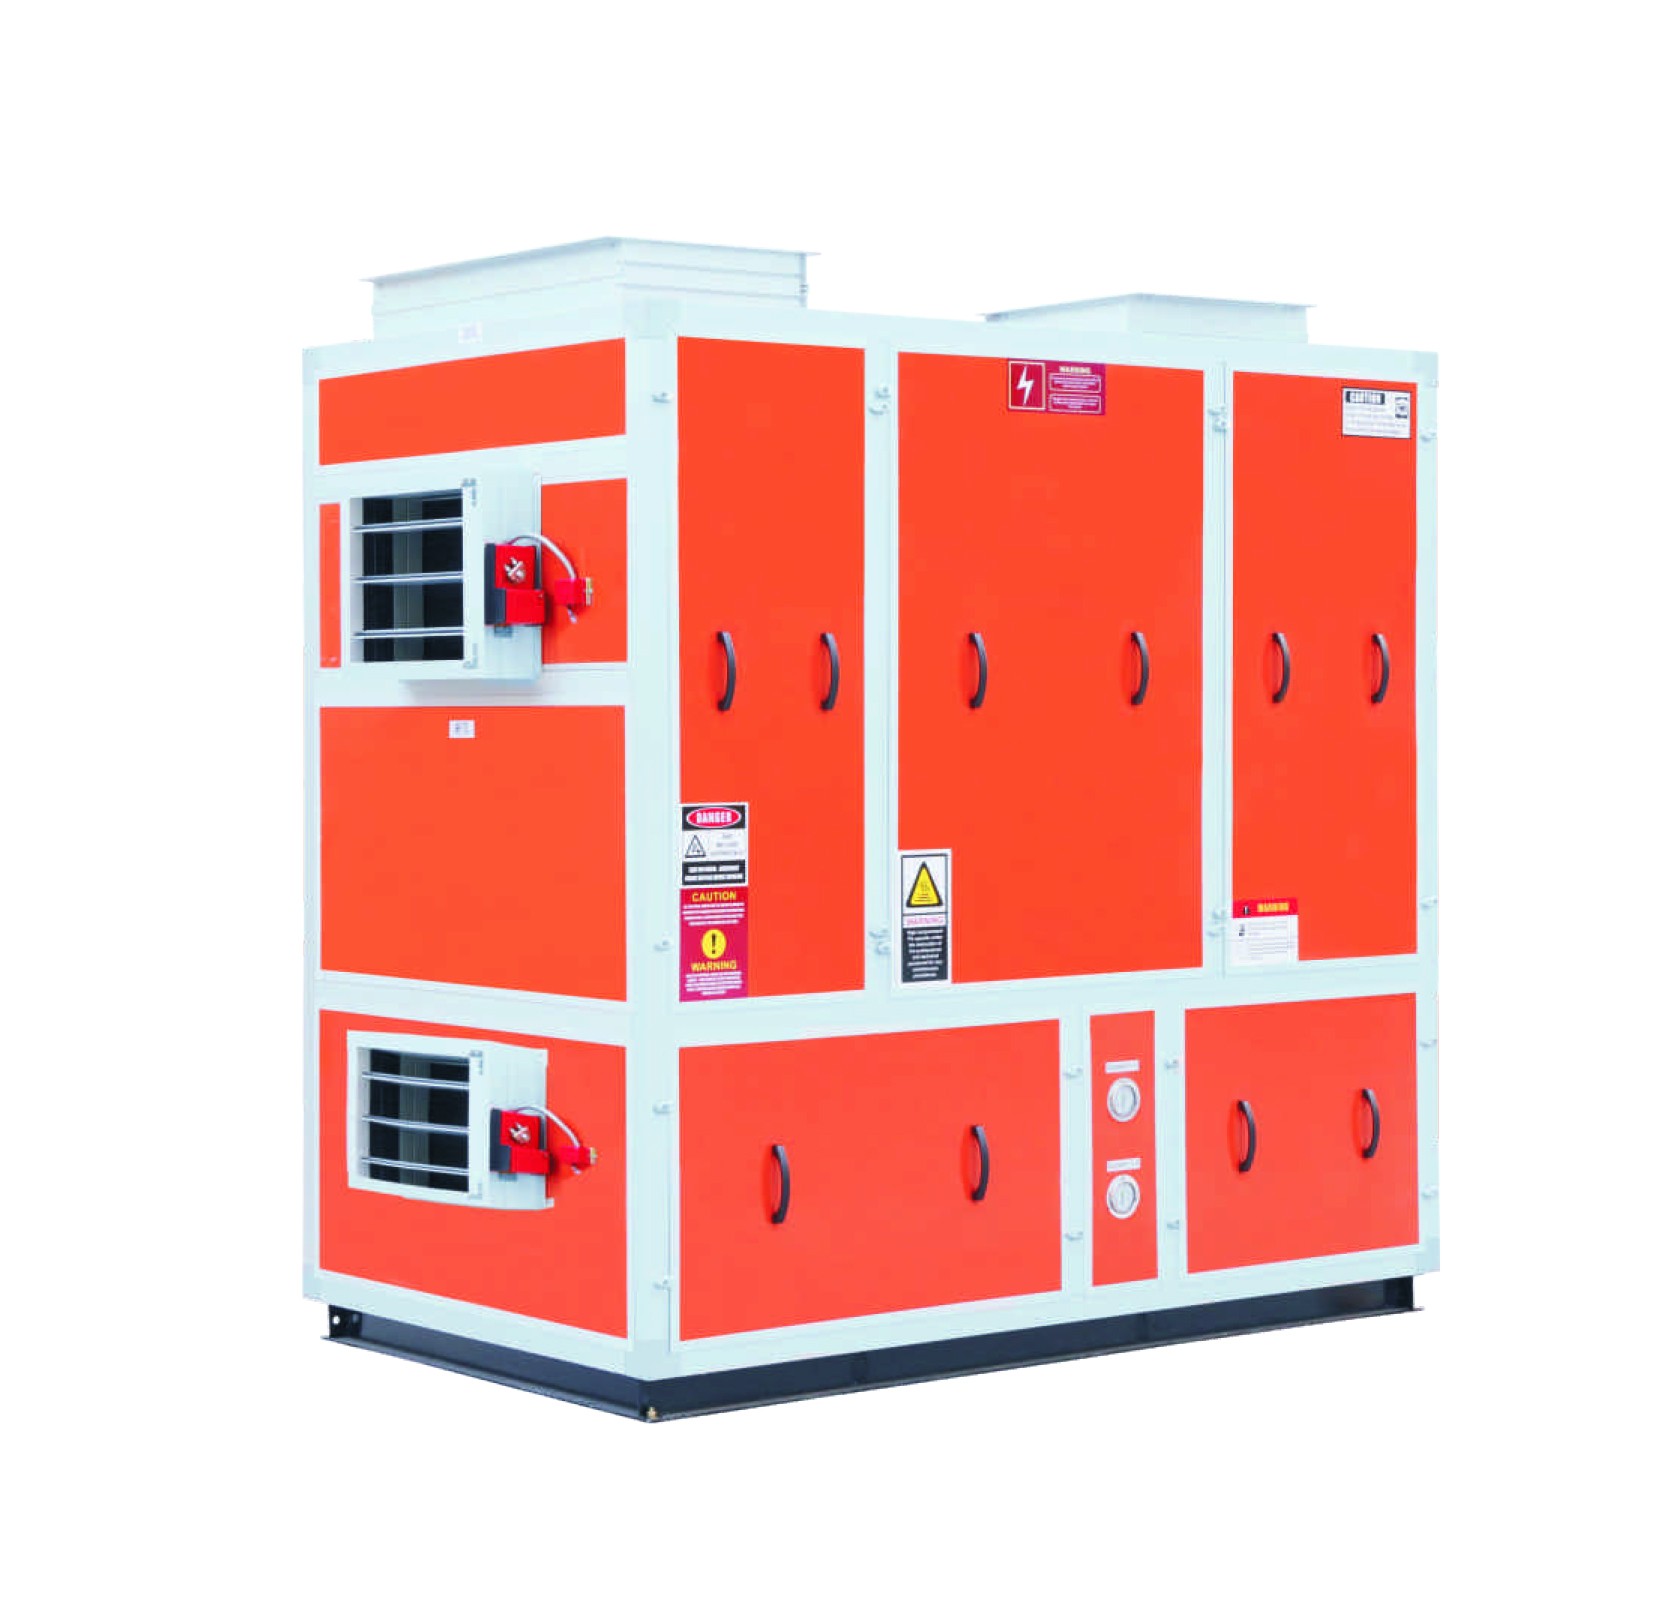 ▲AQUA cabinet type three-in-one constant temperature dehumidification heat pump